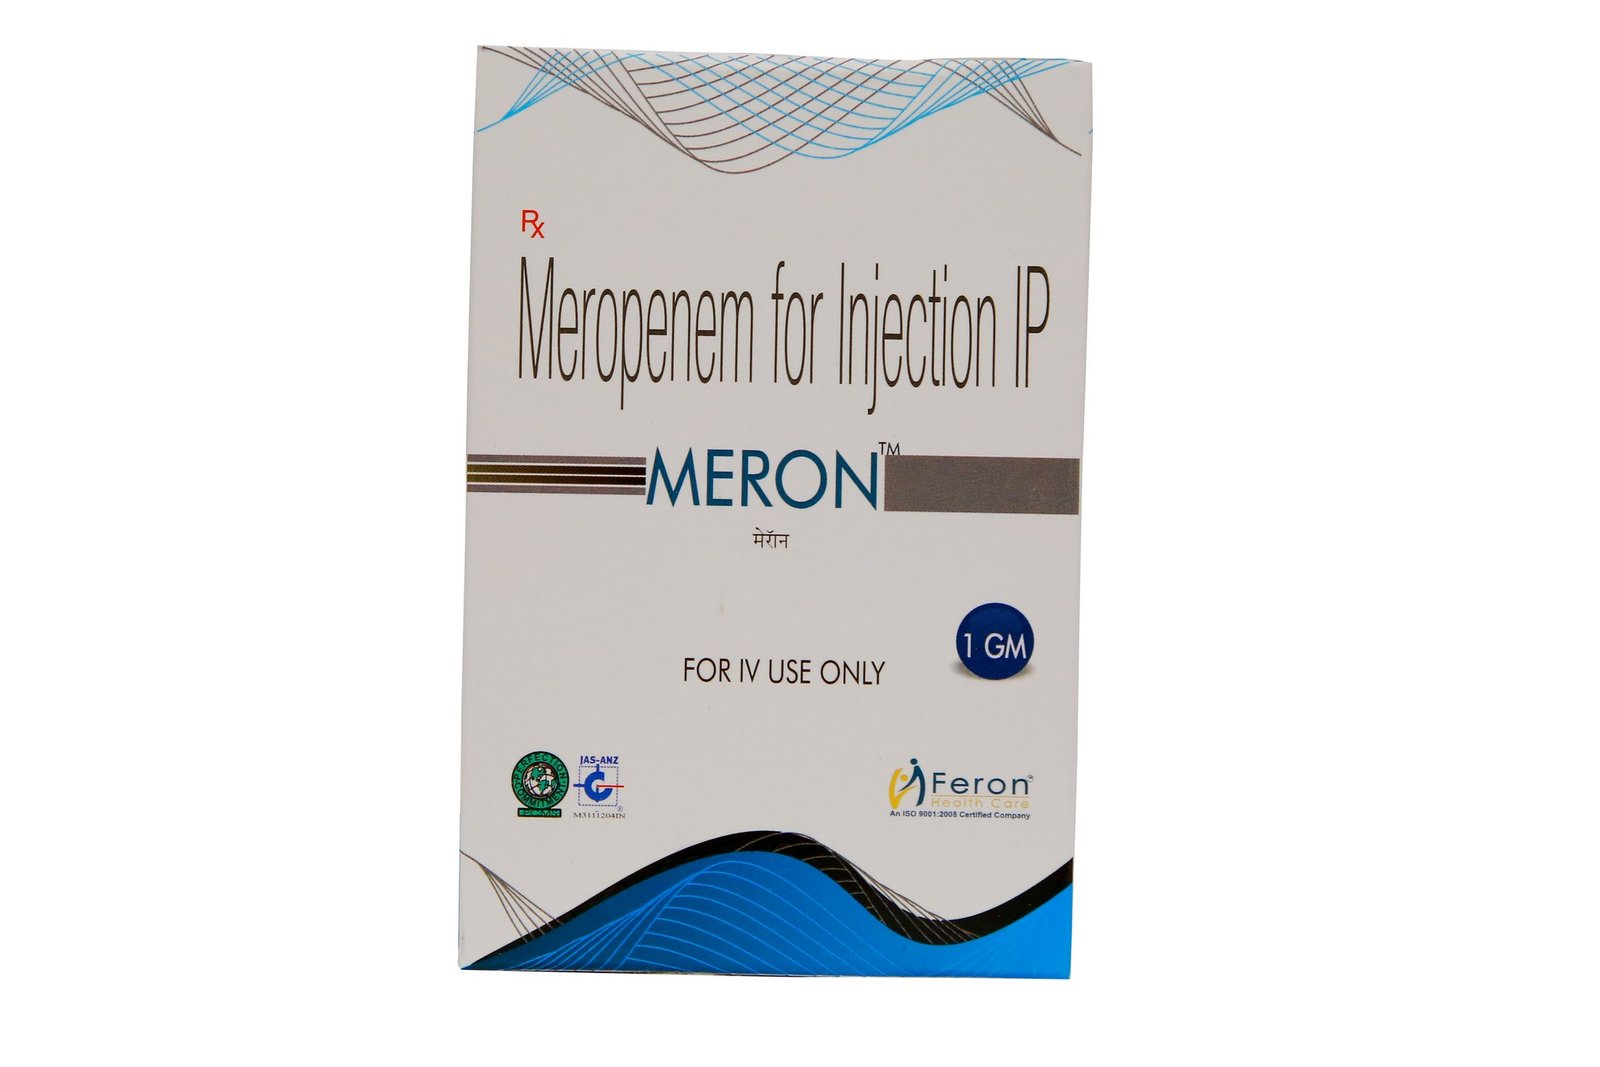 MERON 1000mg injection – Feron Healthcare